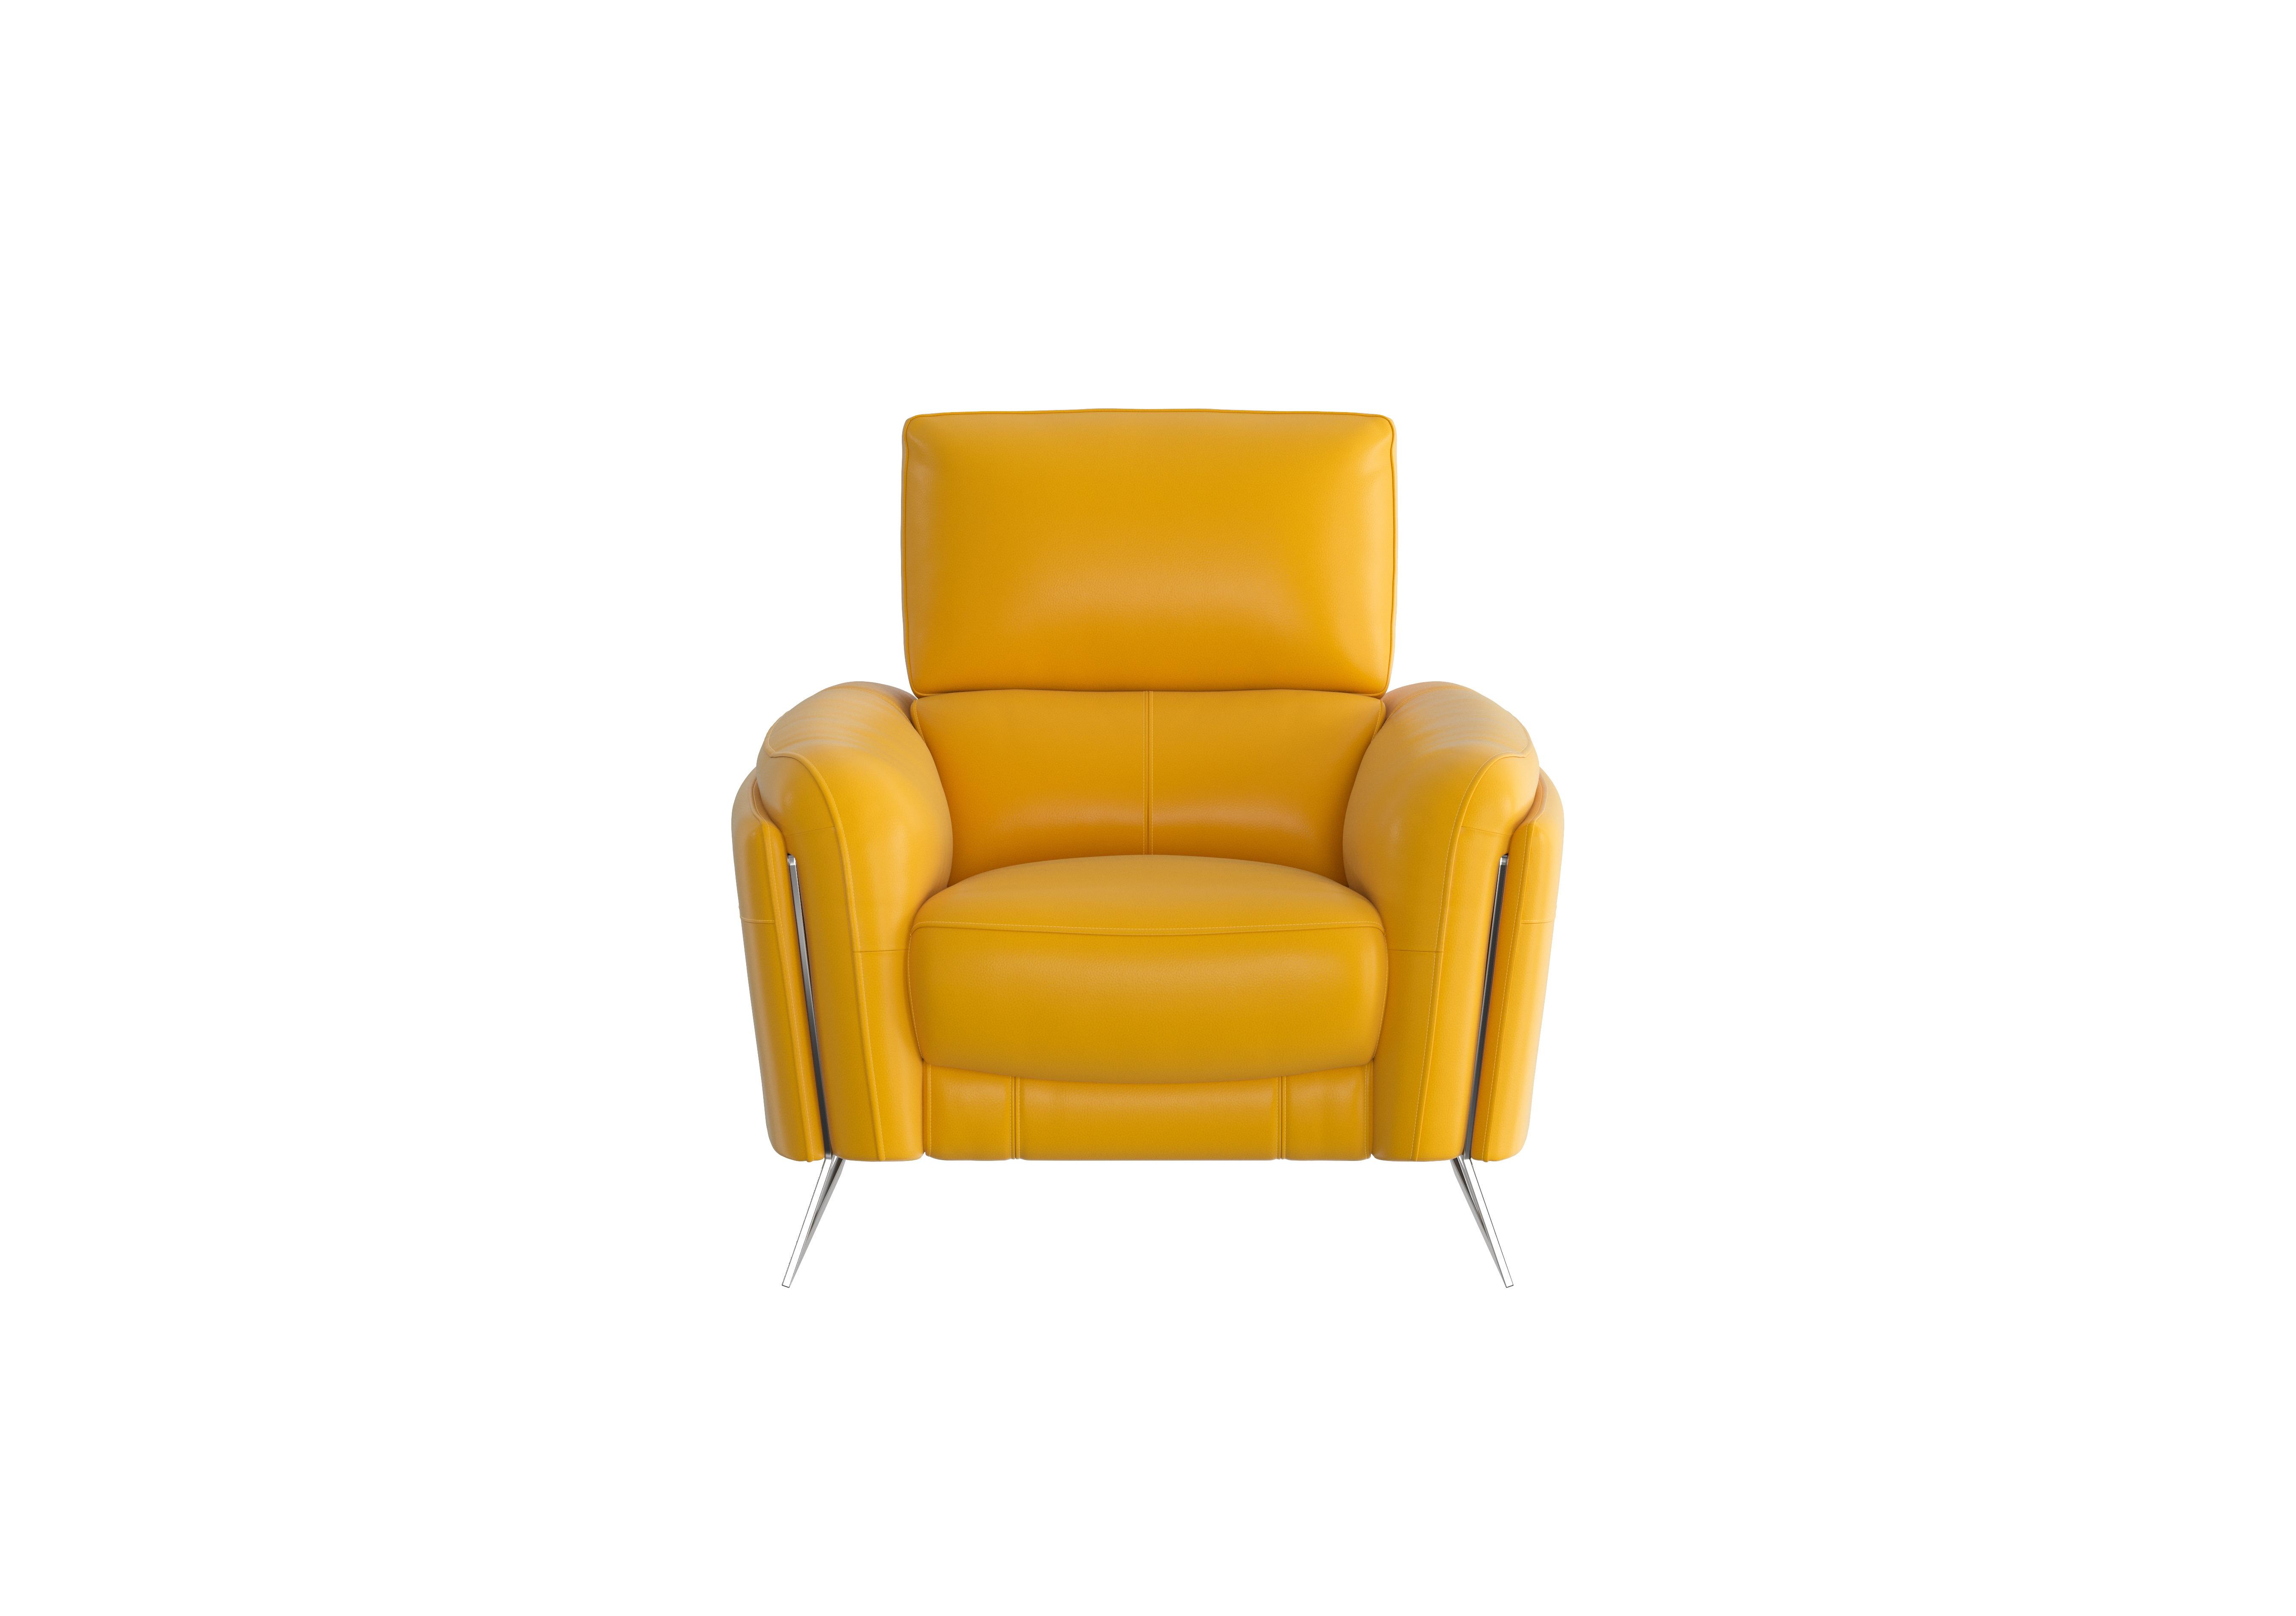 Amarilla Leather Armchair in Nc-303e Sunflower on Furniture Village